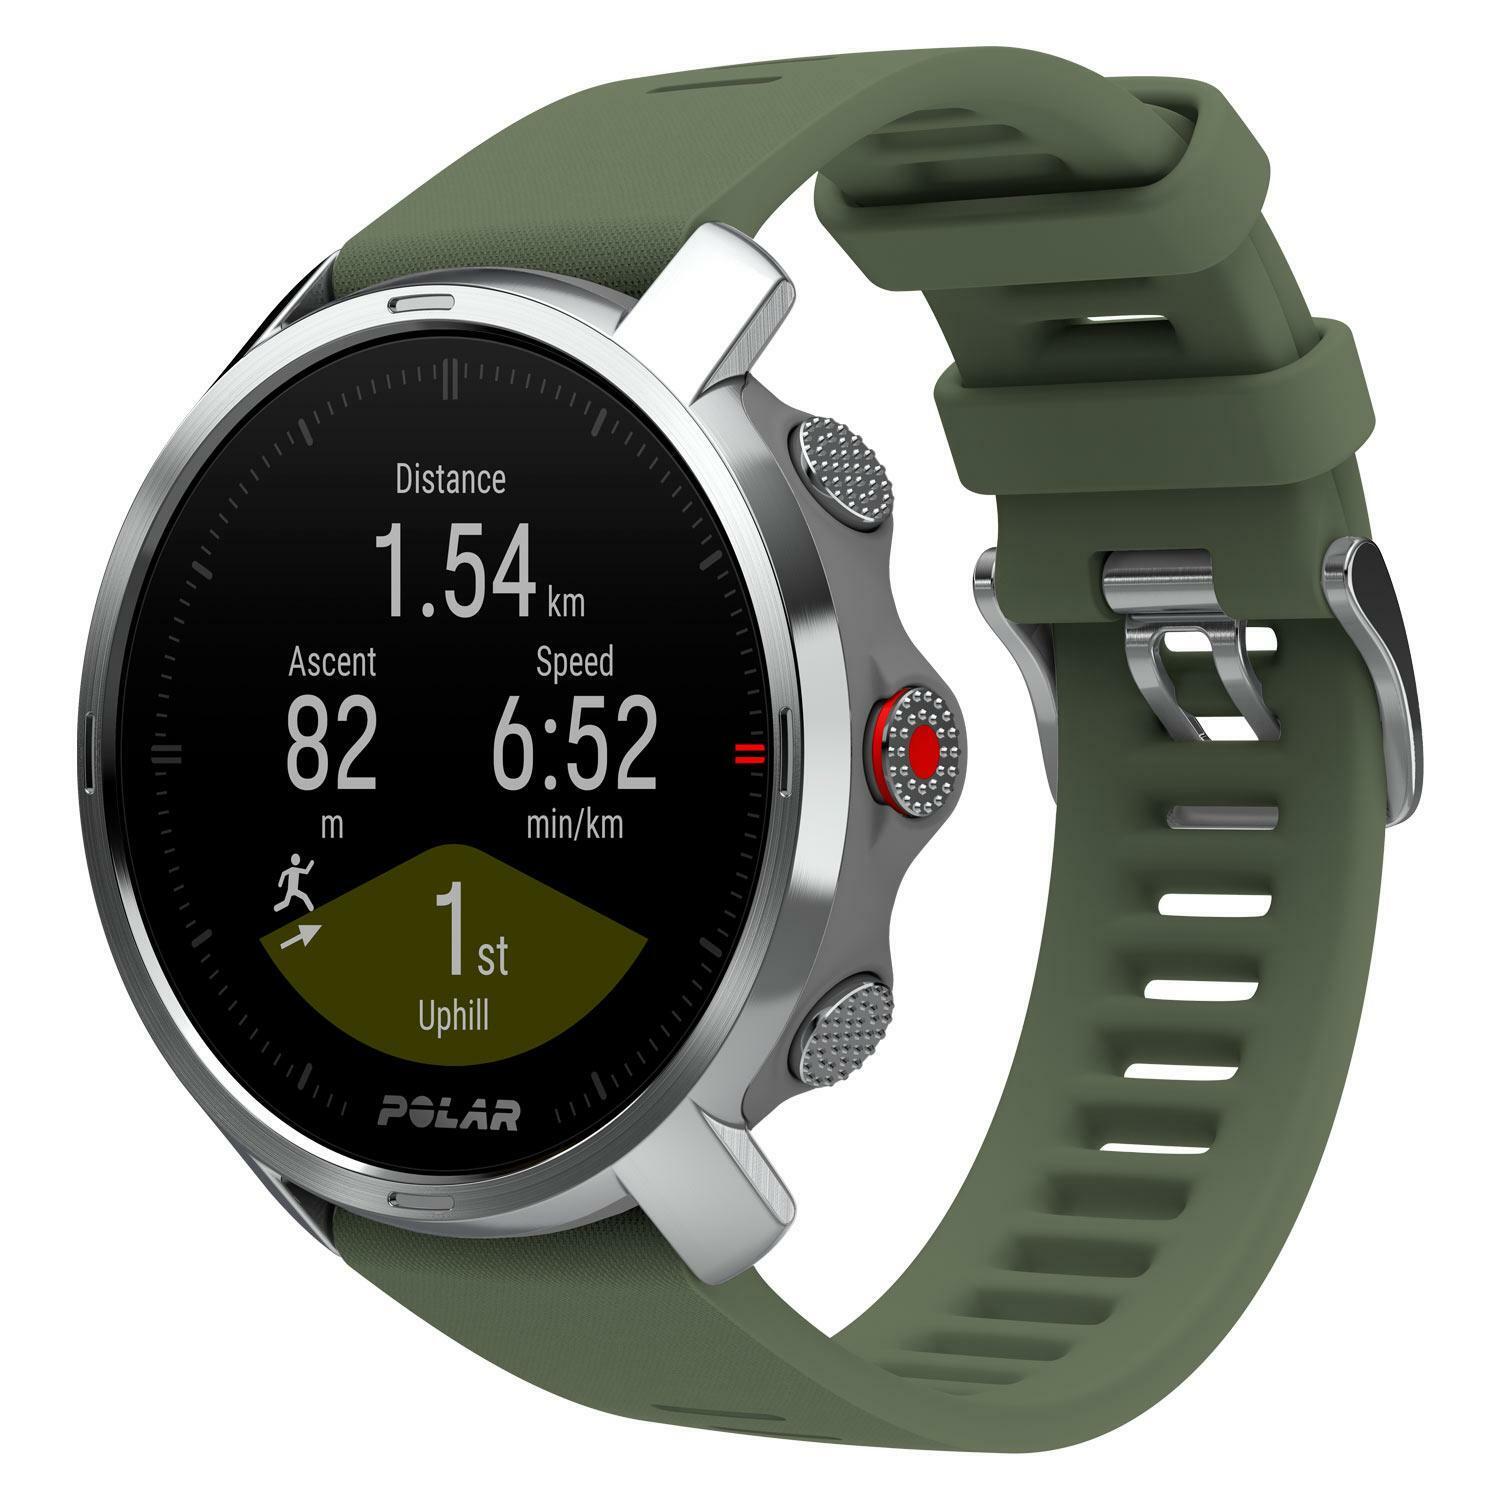 polar polar smartwatch cardio grit x verde m/l